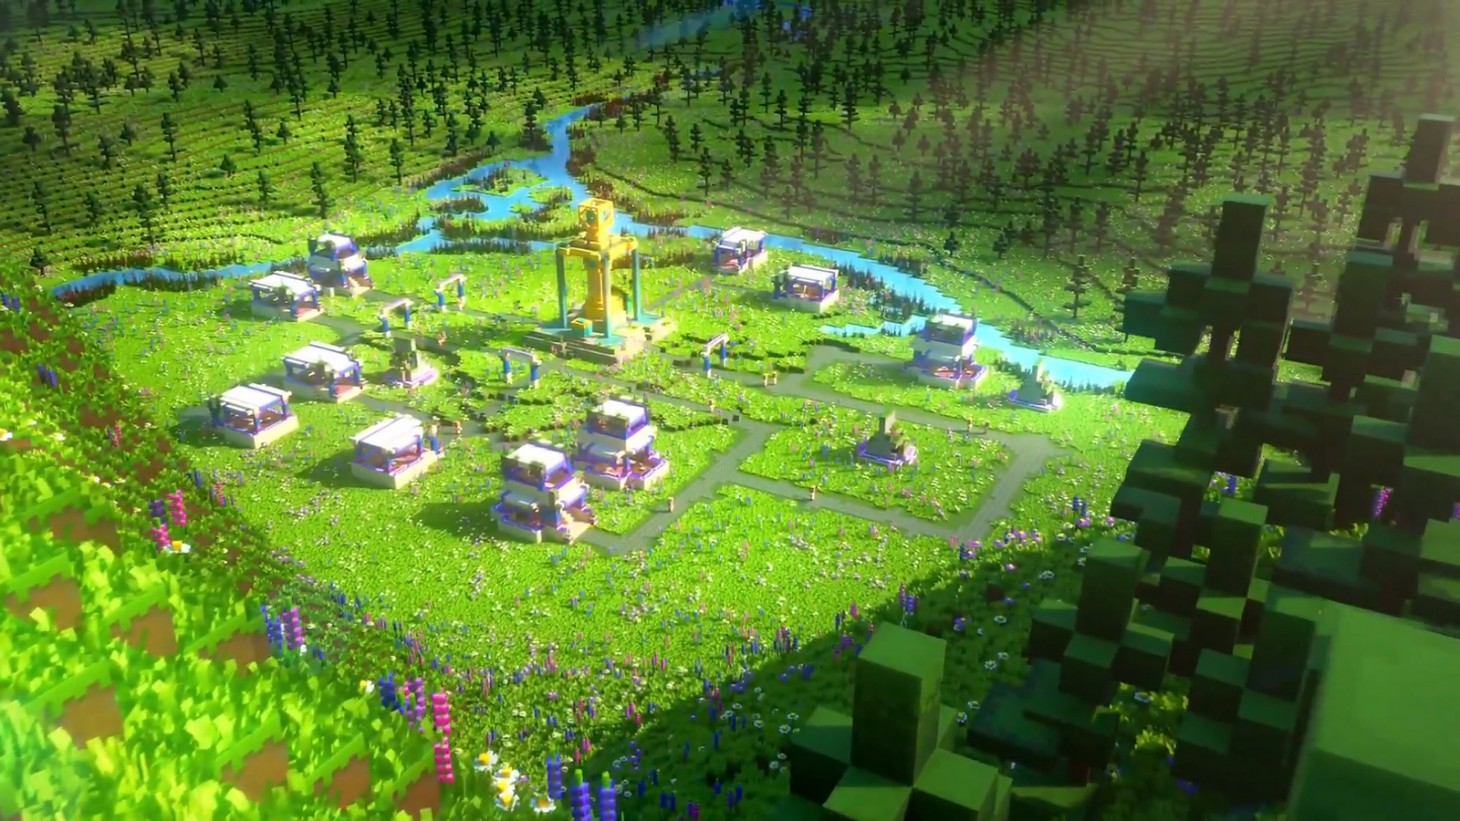 Minecraft Legends - Announcement Trailer - Nintendo Switch 